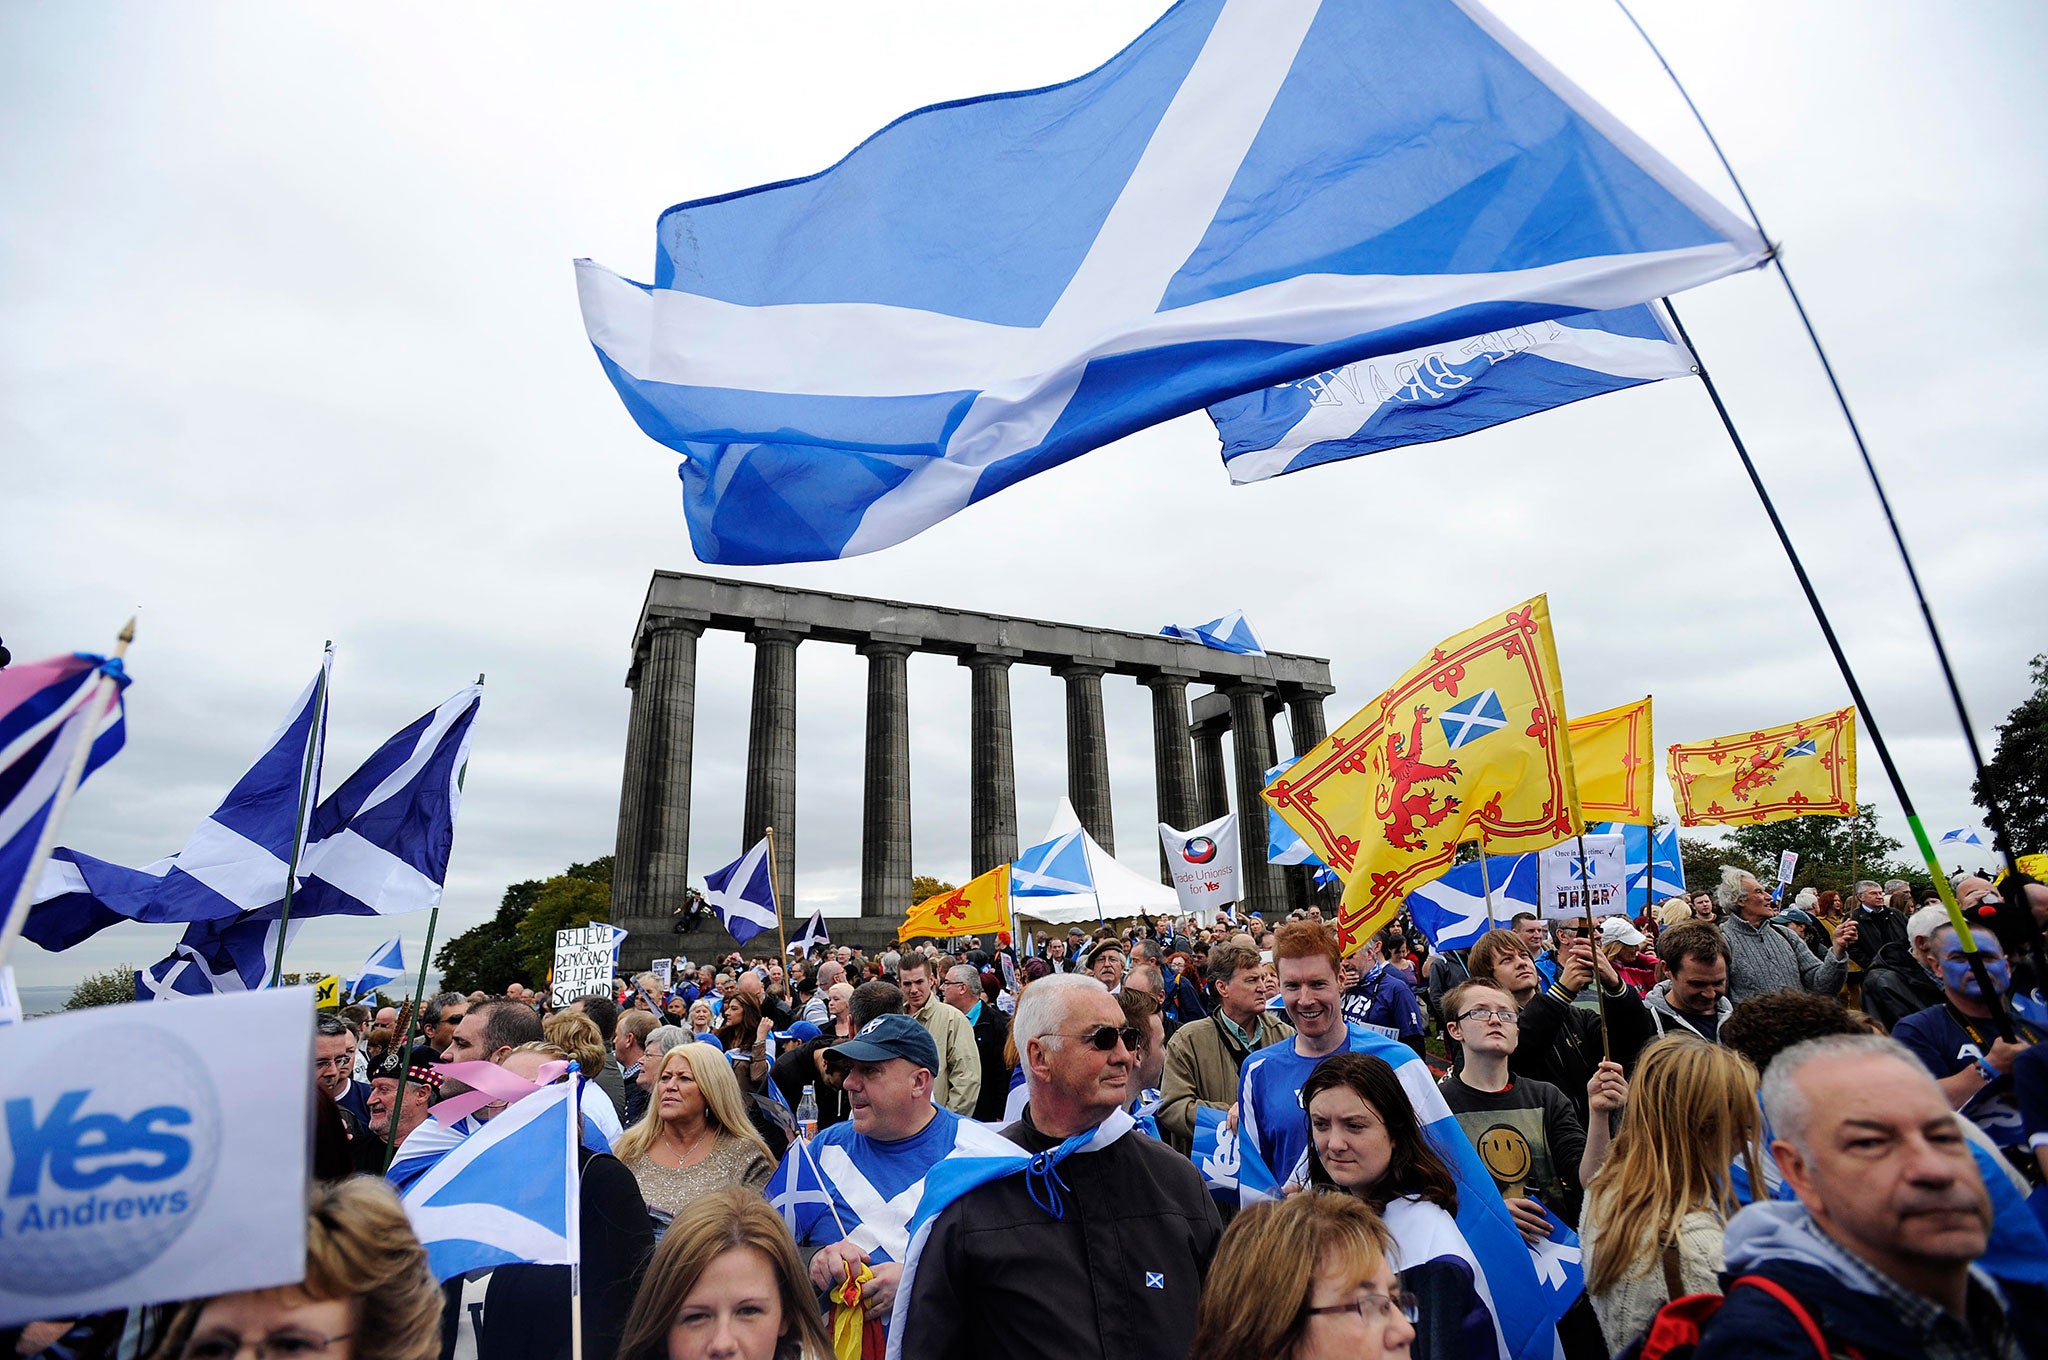 People live in scotland. Референдум о независимости Шотландии 2021. Референдум о независимости Шотландии 2014. День независимости Шотландии. Сепаратизм в Шотландии.